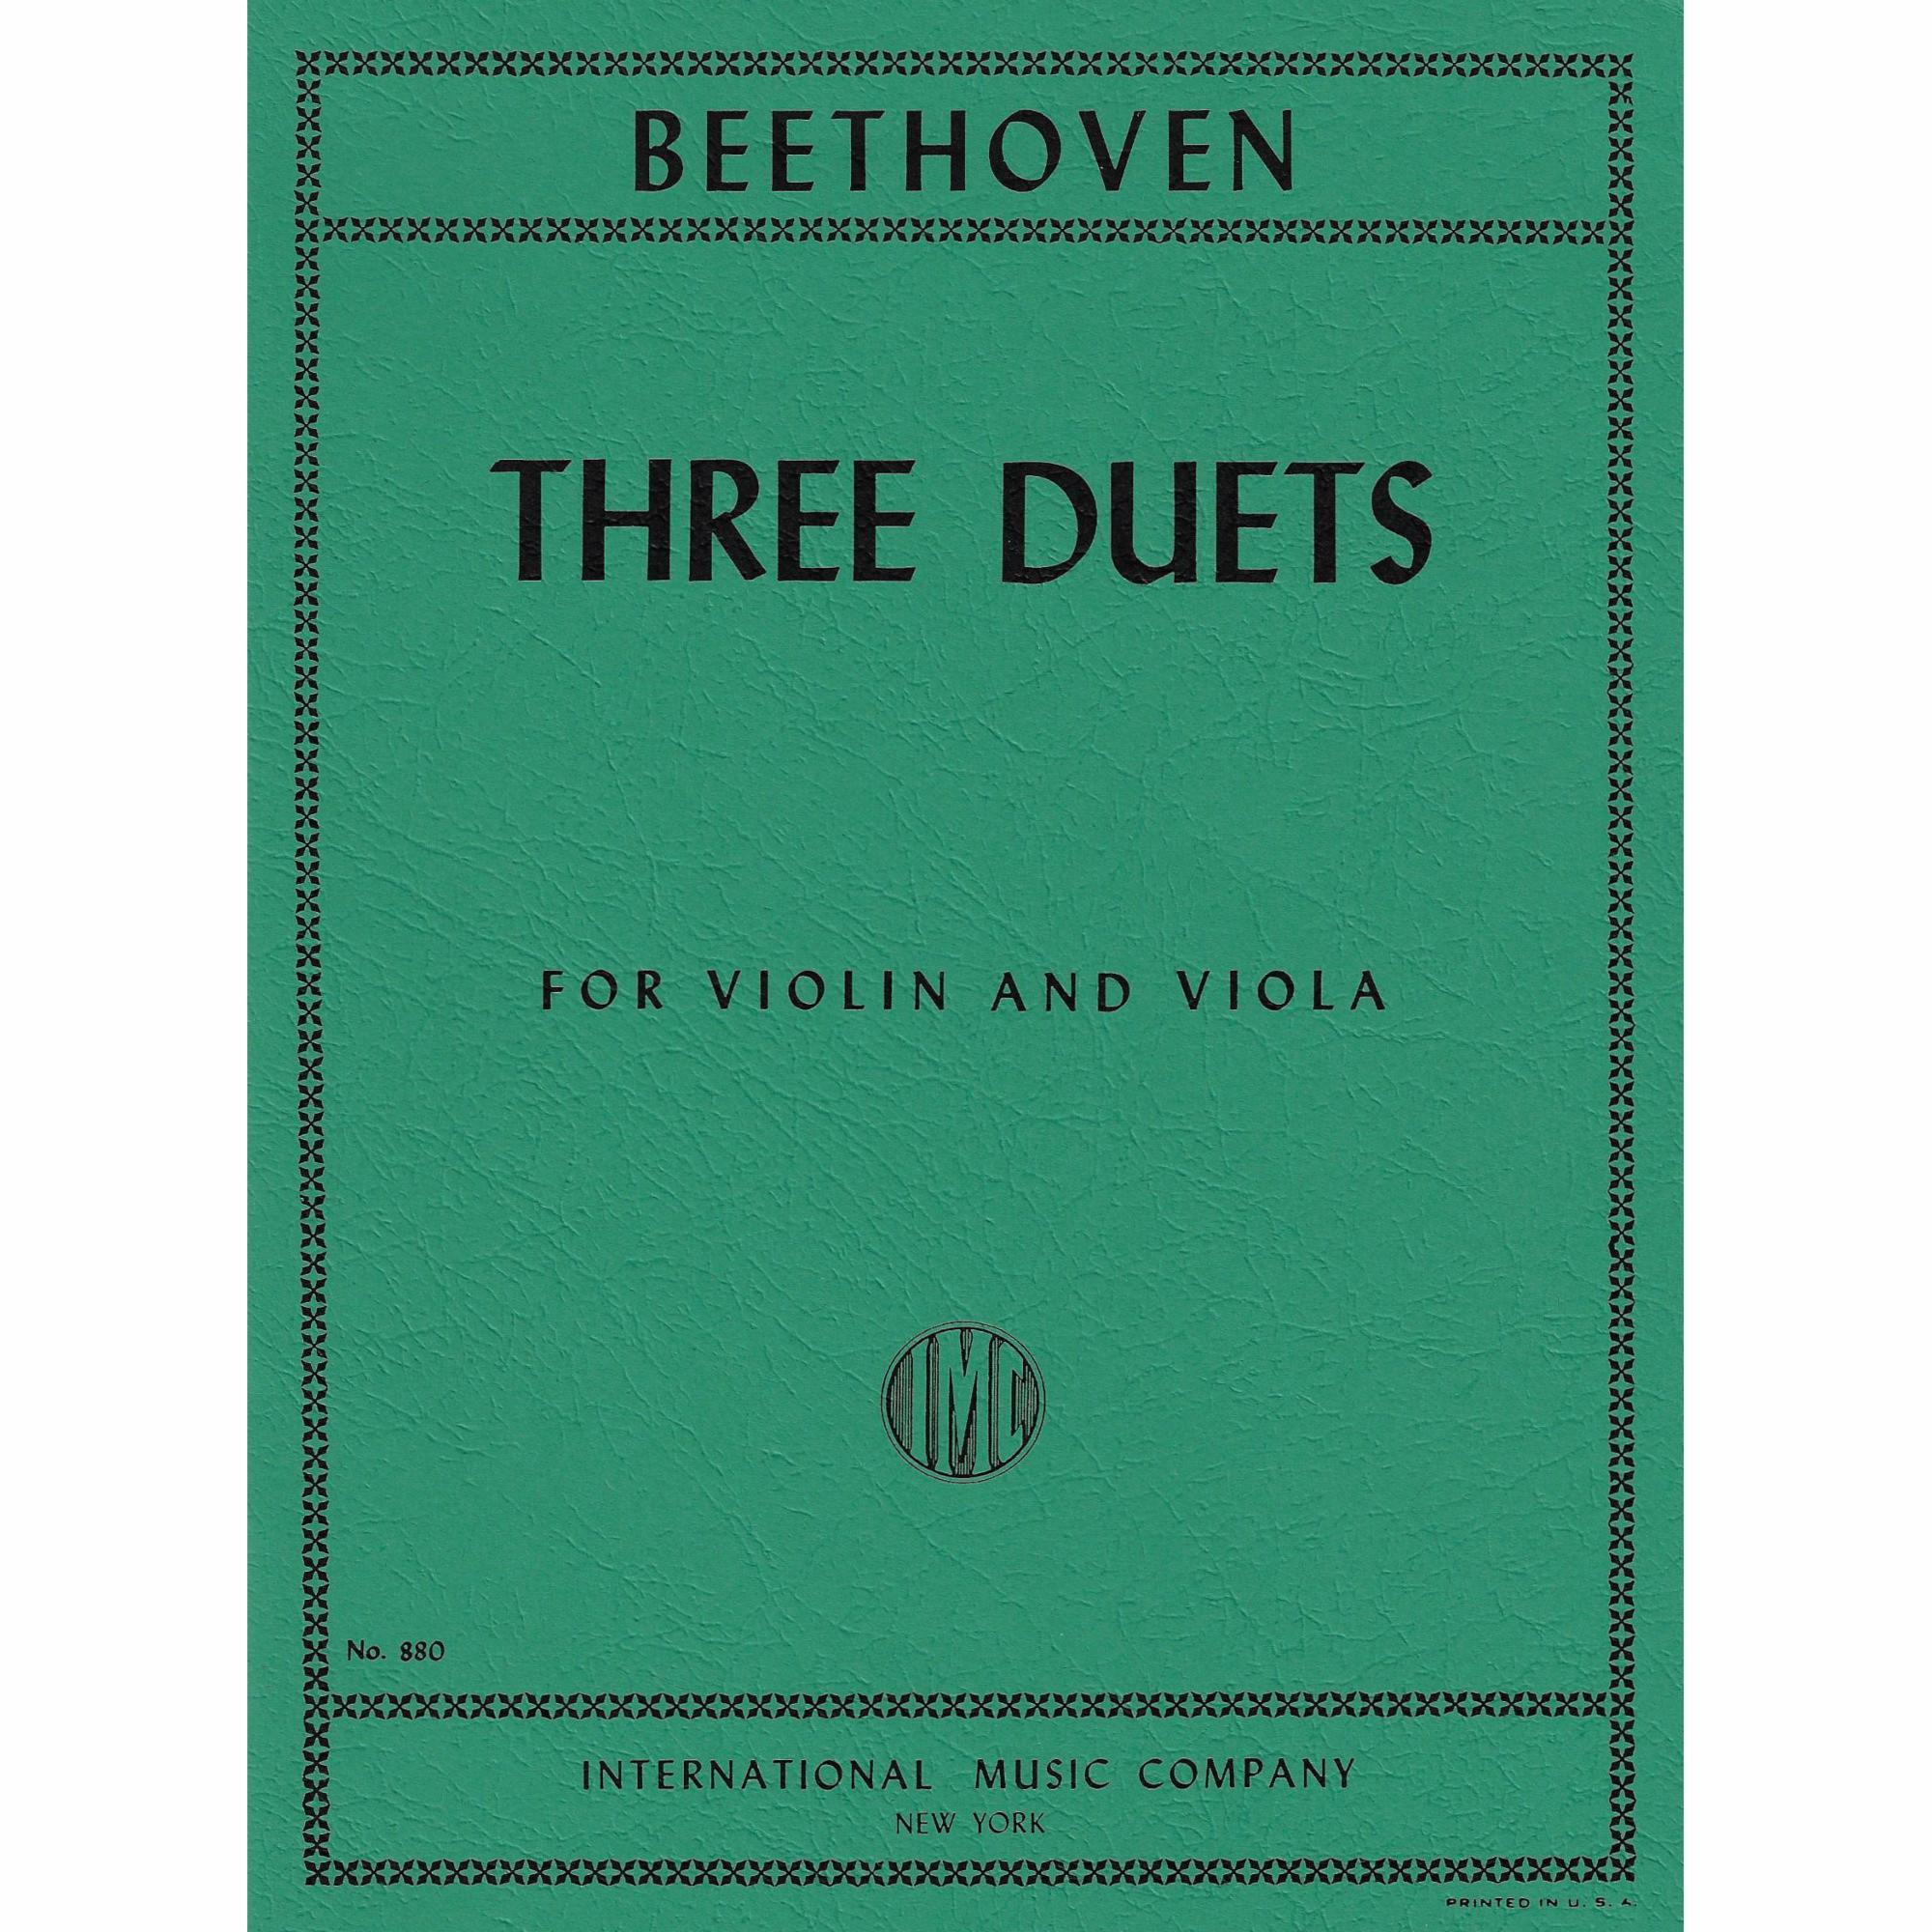 Beethoven -- Three Duets for Violin and Viola